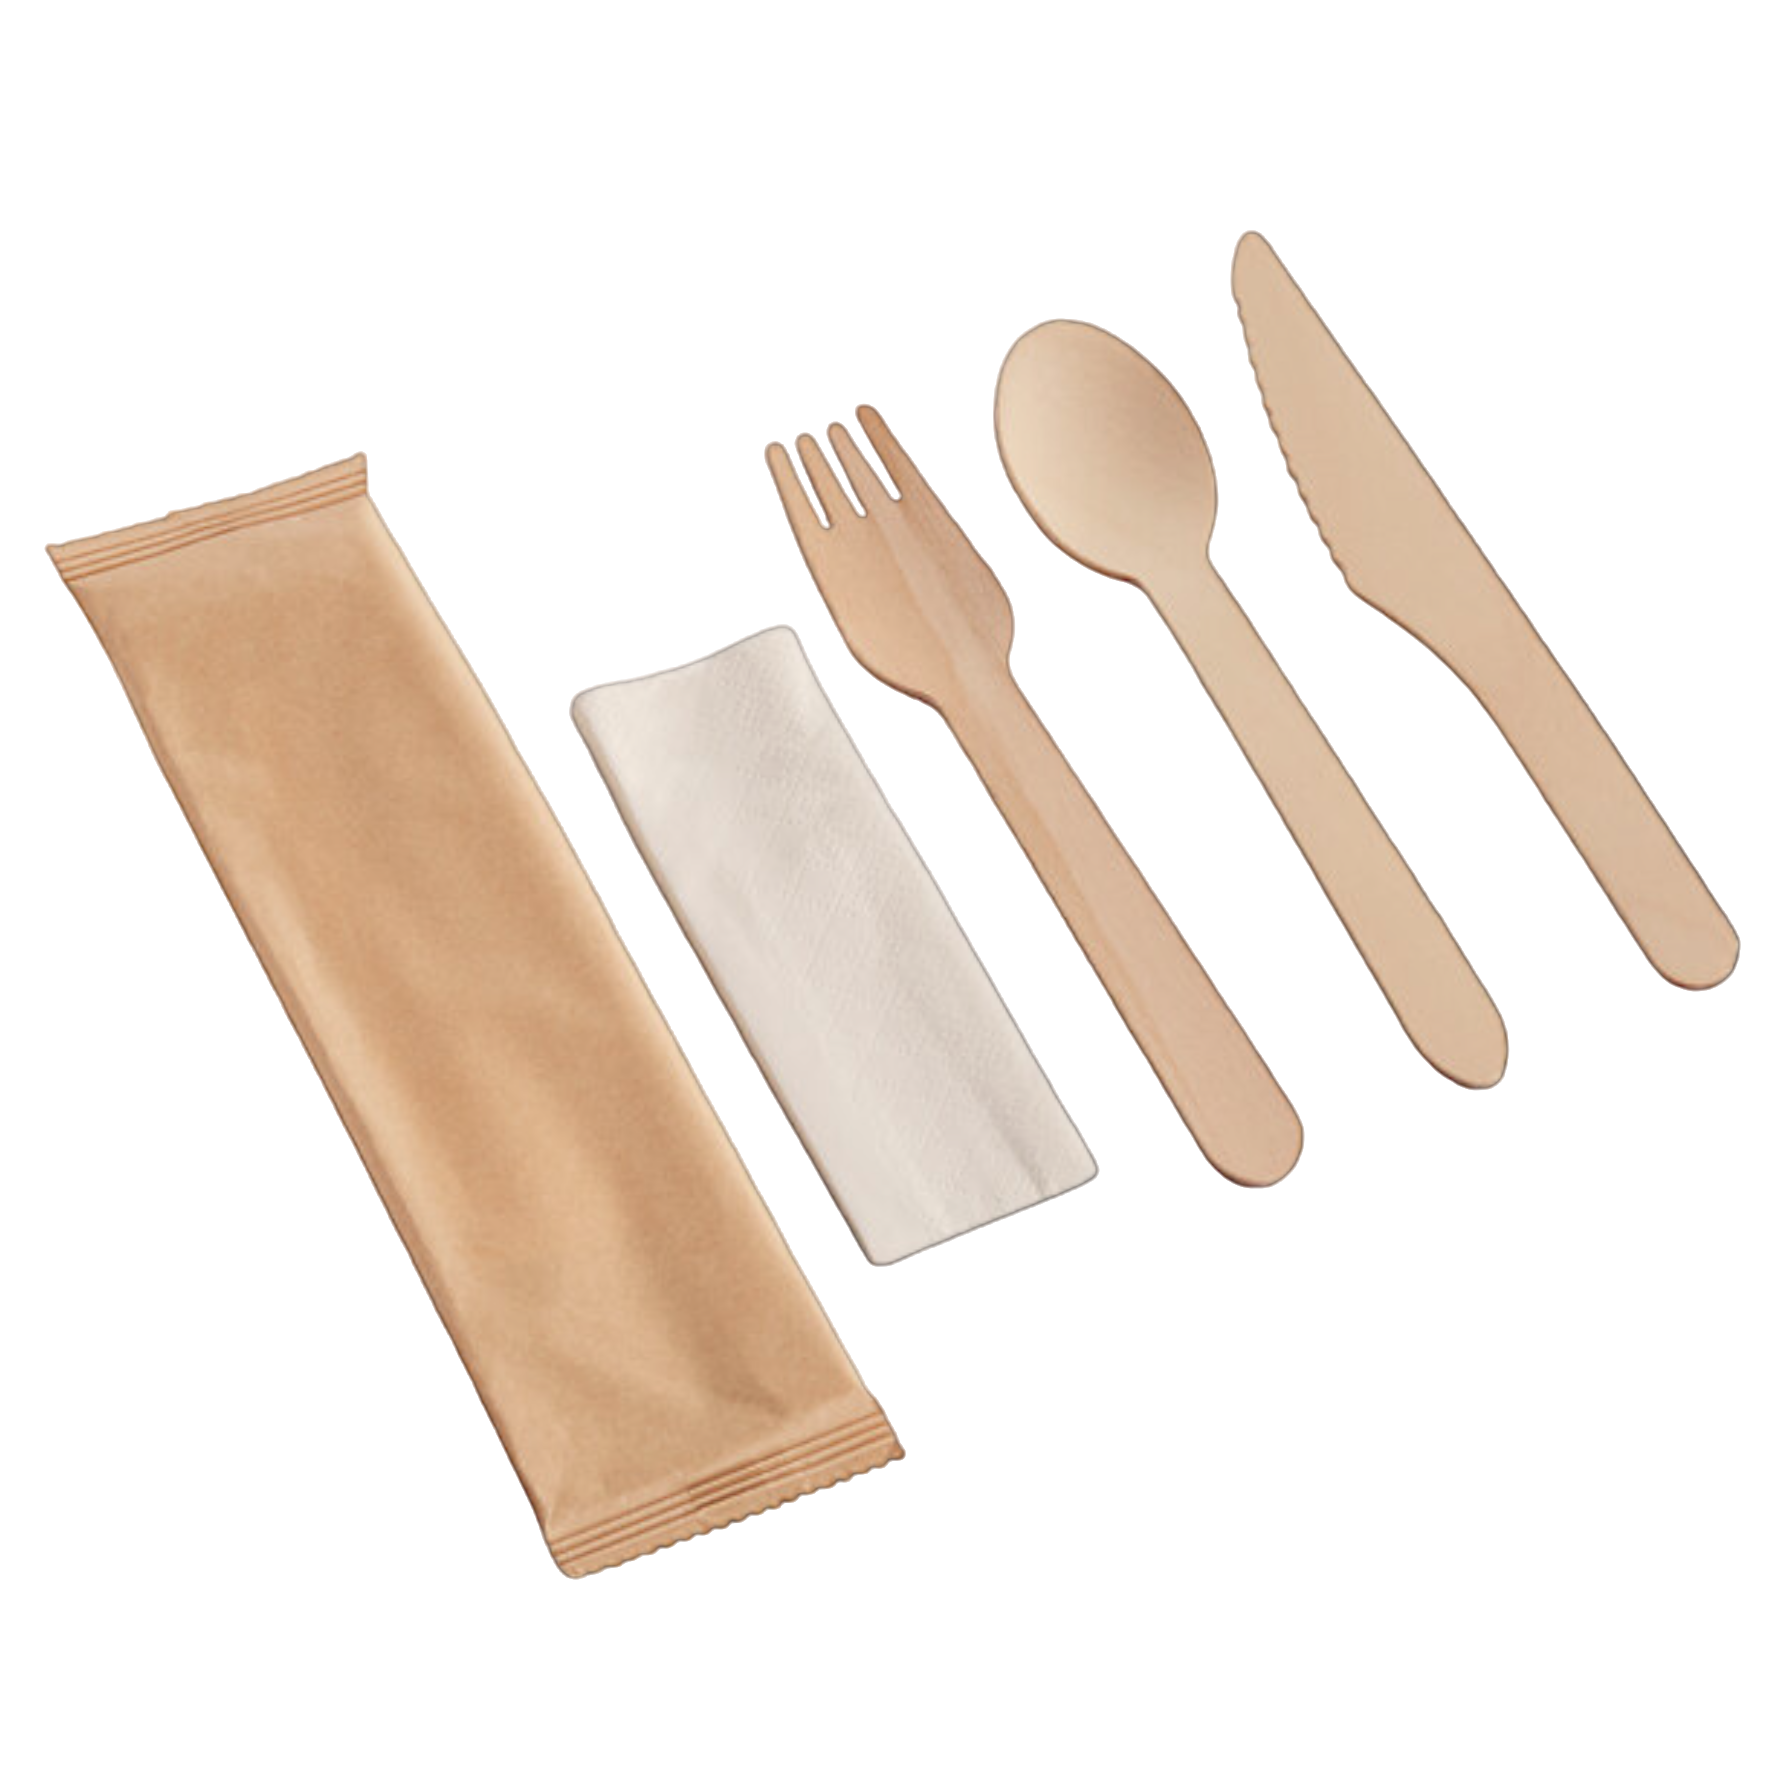 wooden cutlery set